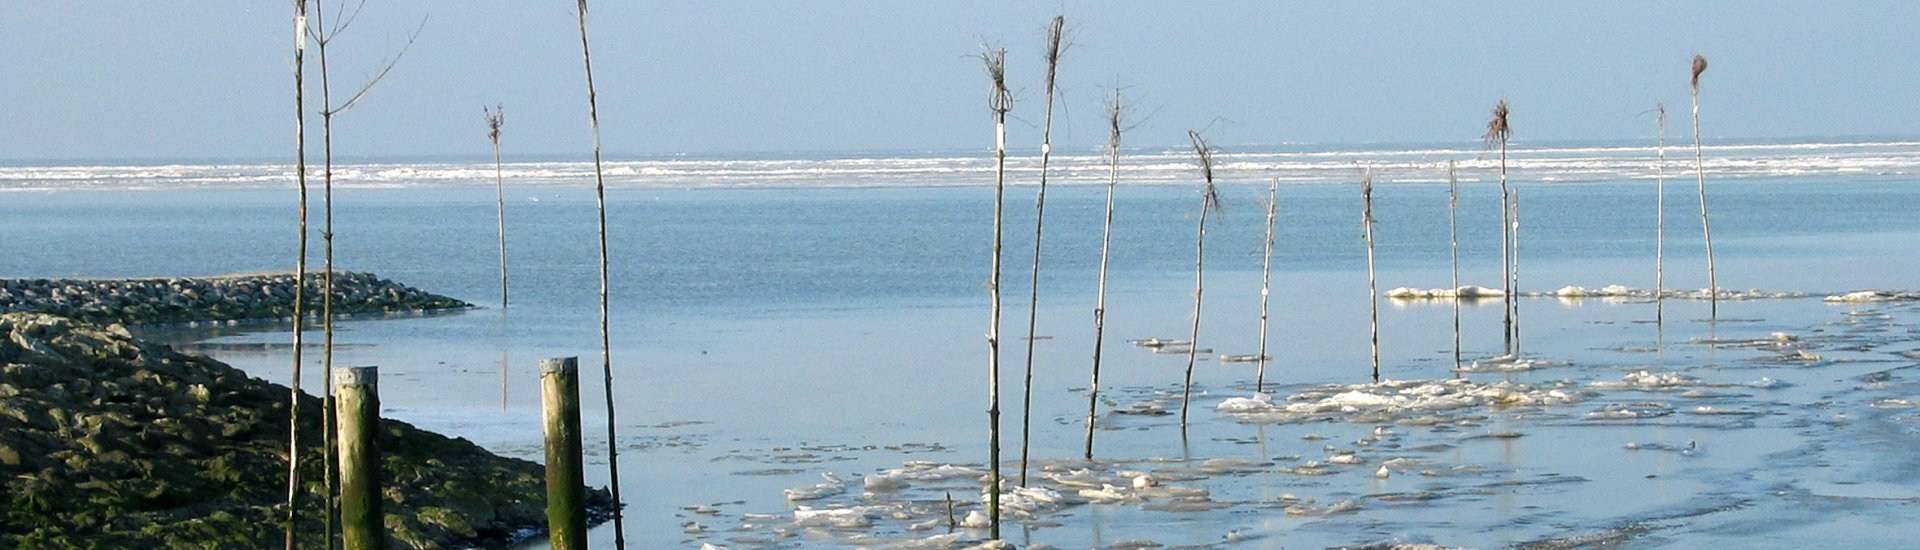 De Waddenzee in de winter. (Foto: CC/Flickr.com | Andreas Adelmann)